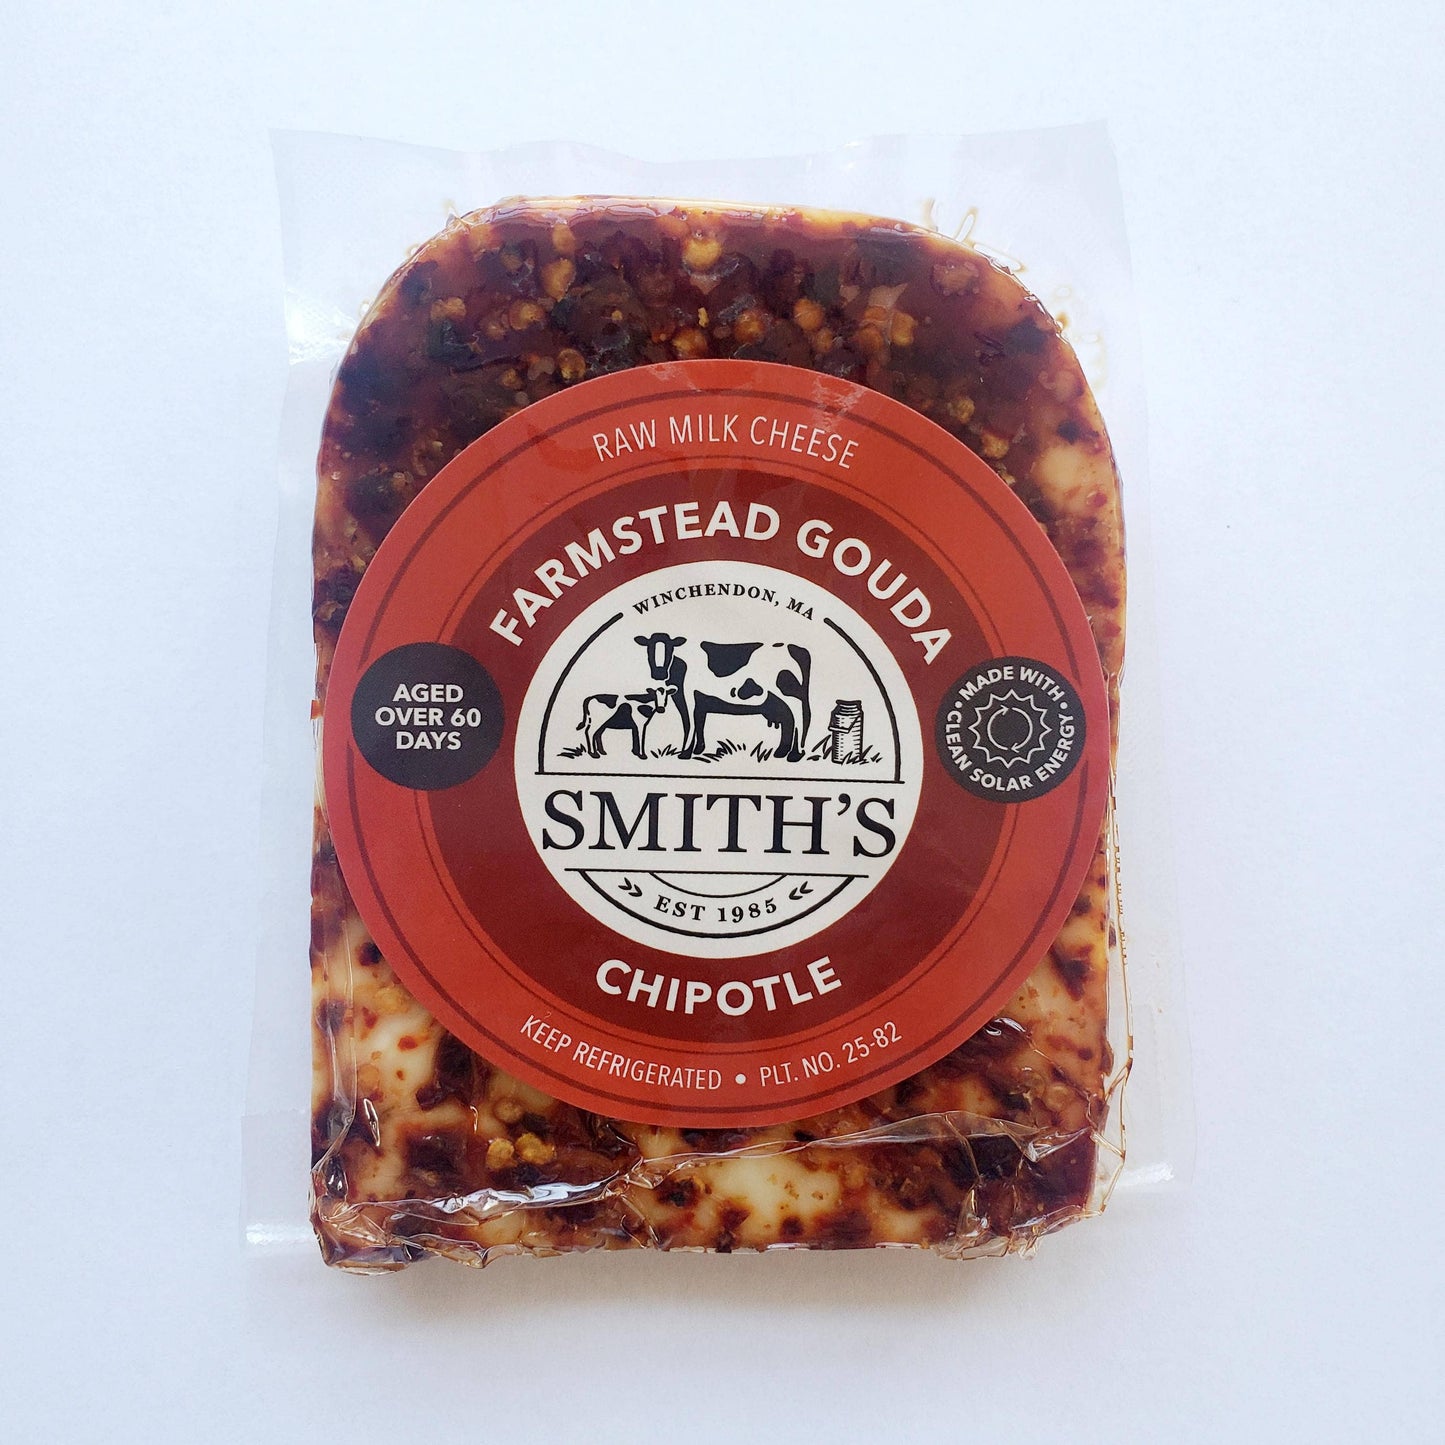 Smith's Country Cheese - Chipotle Gouda